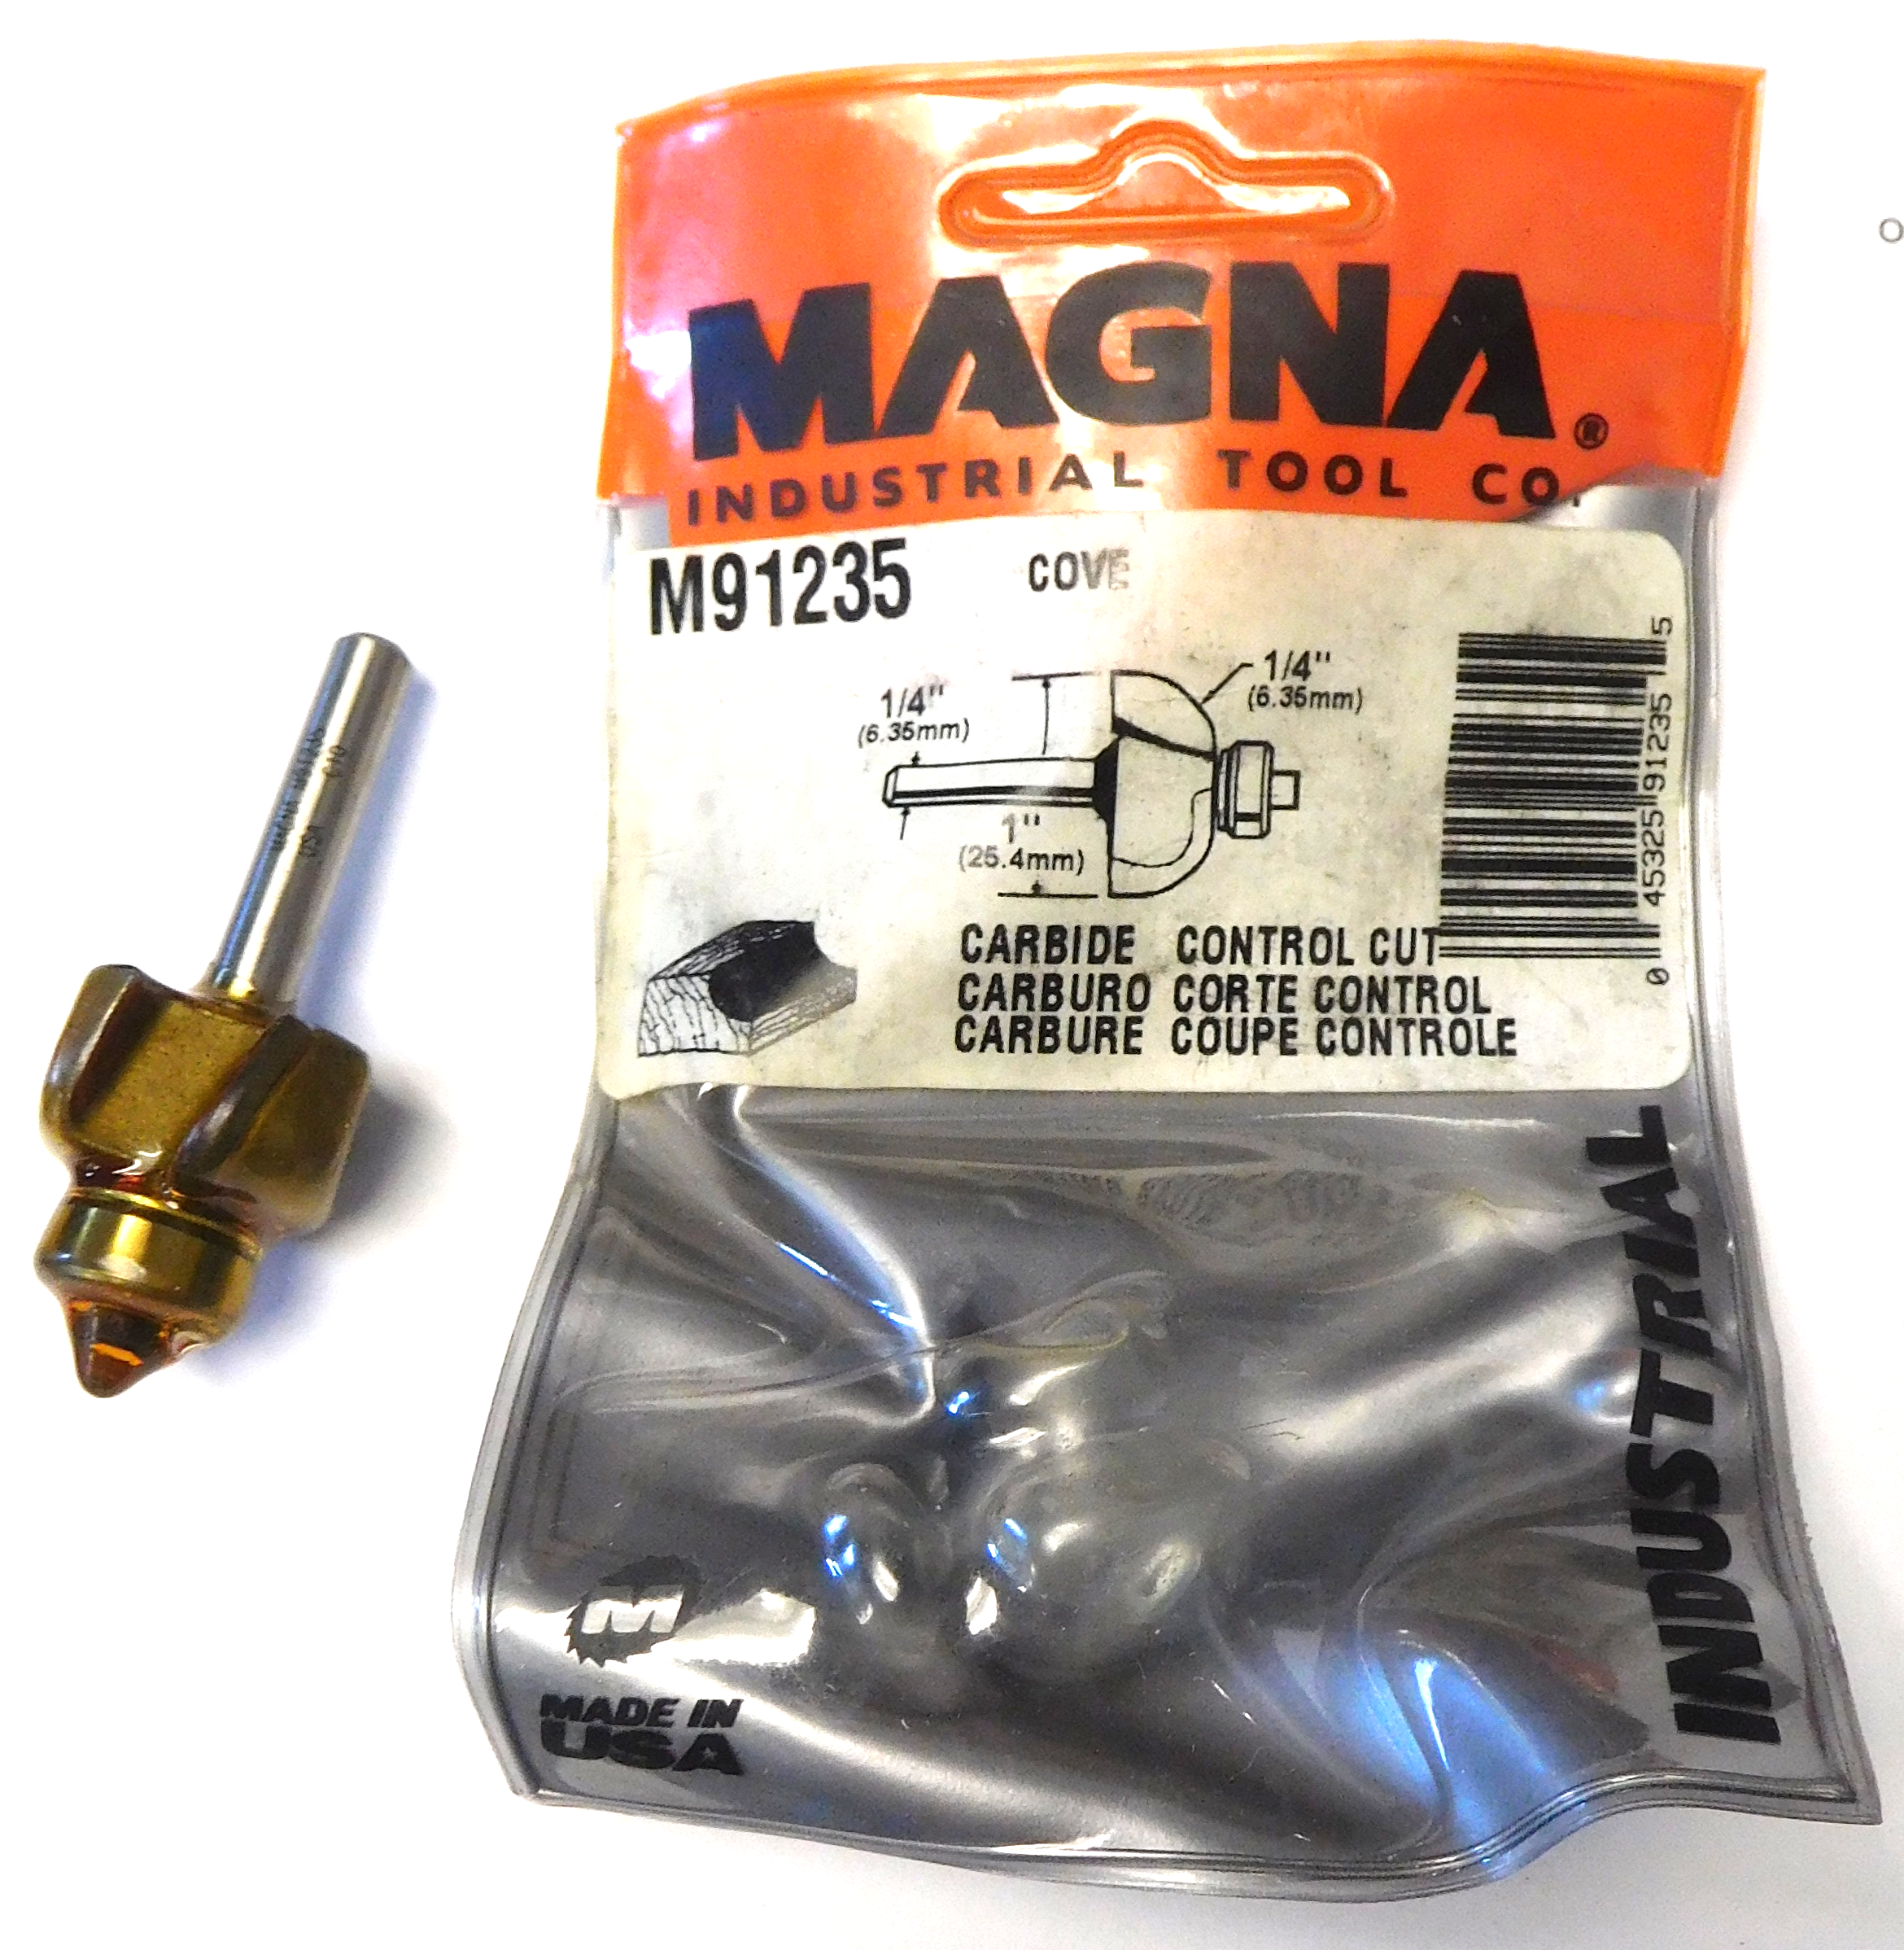 Magna M91235 1/4" x 1" Cove Router Bit 1/4" Shank USA